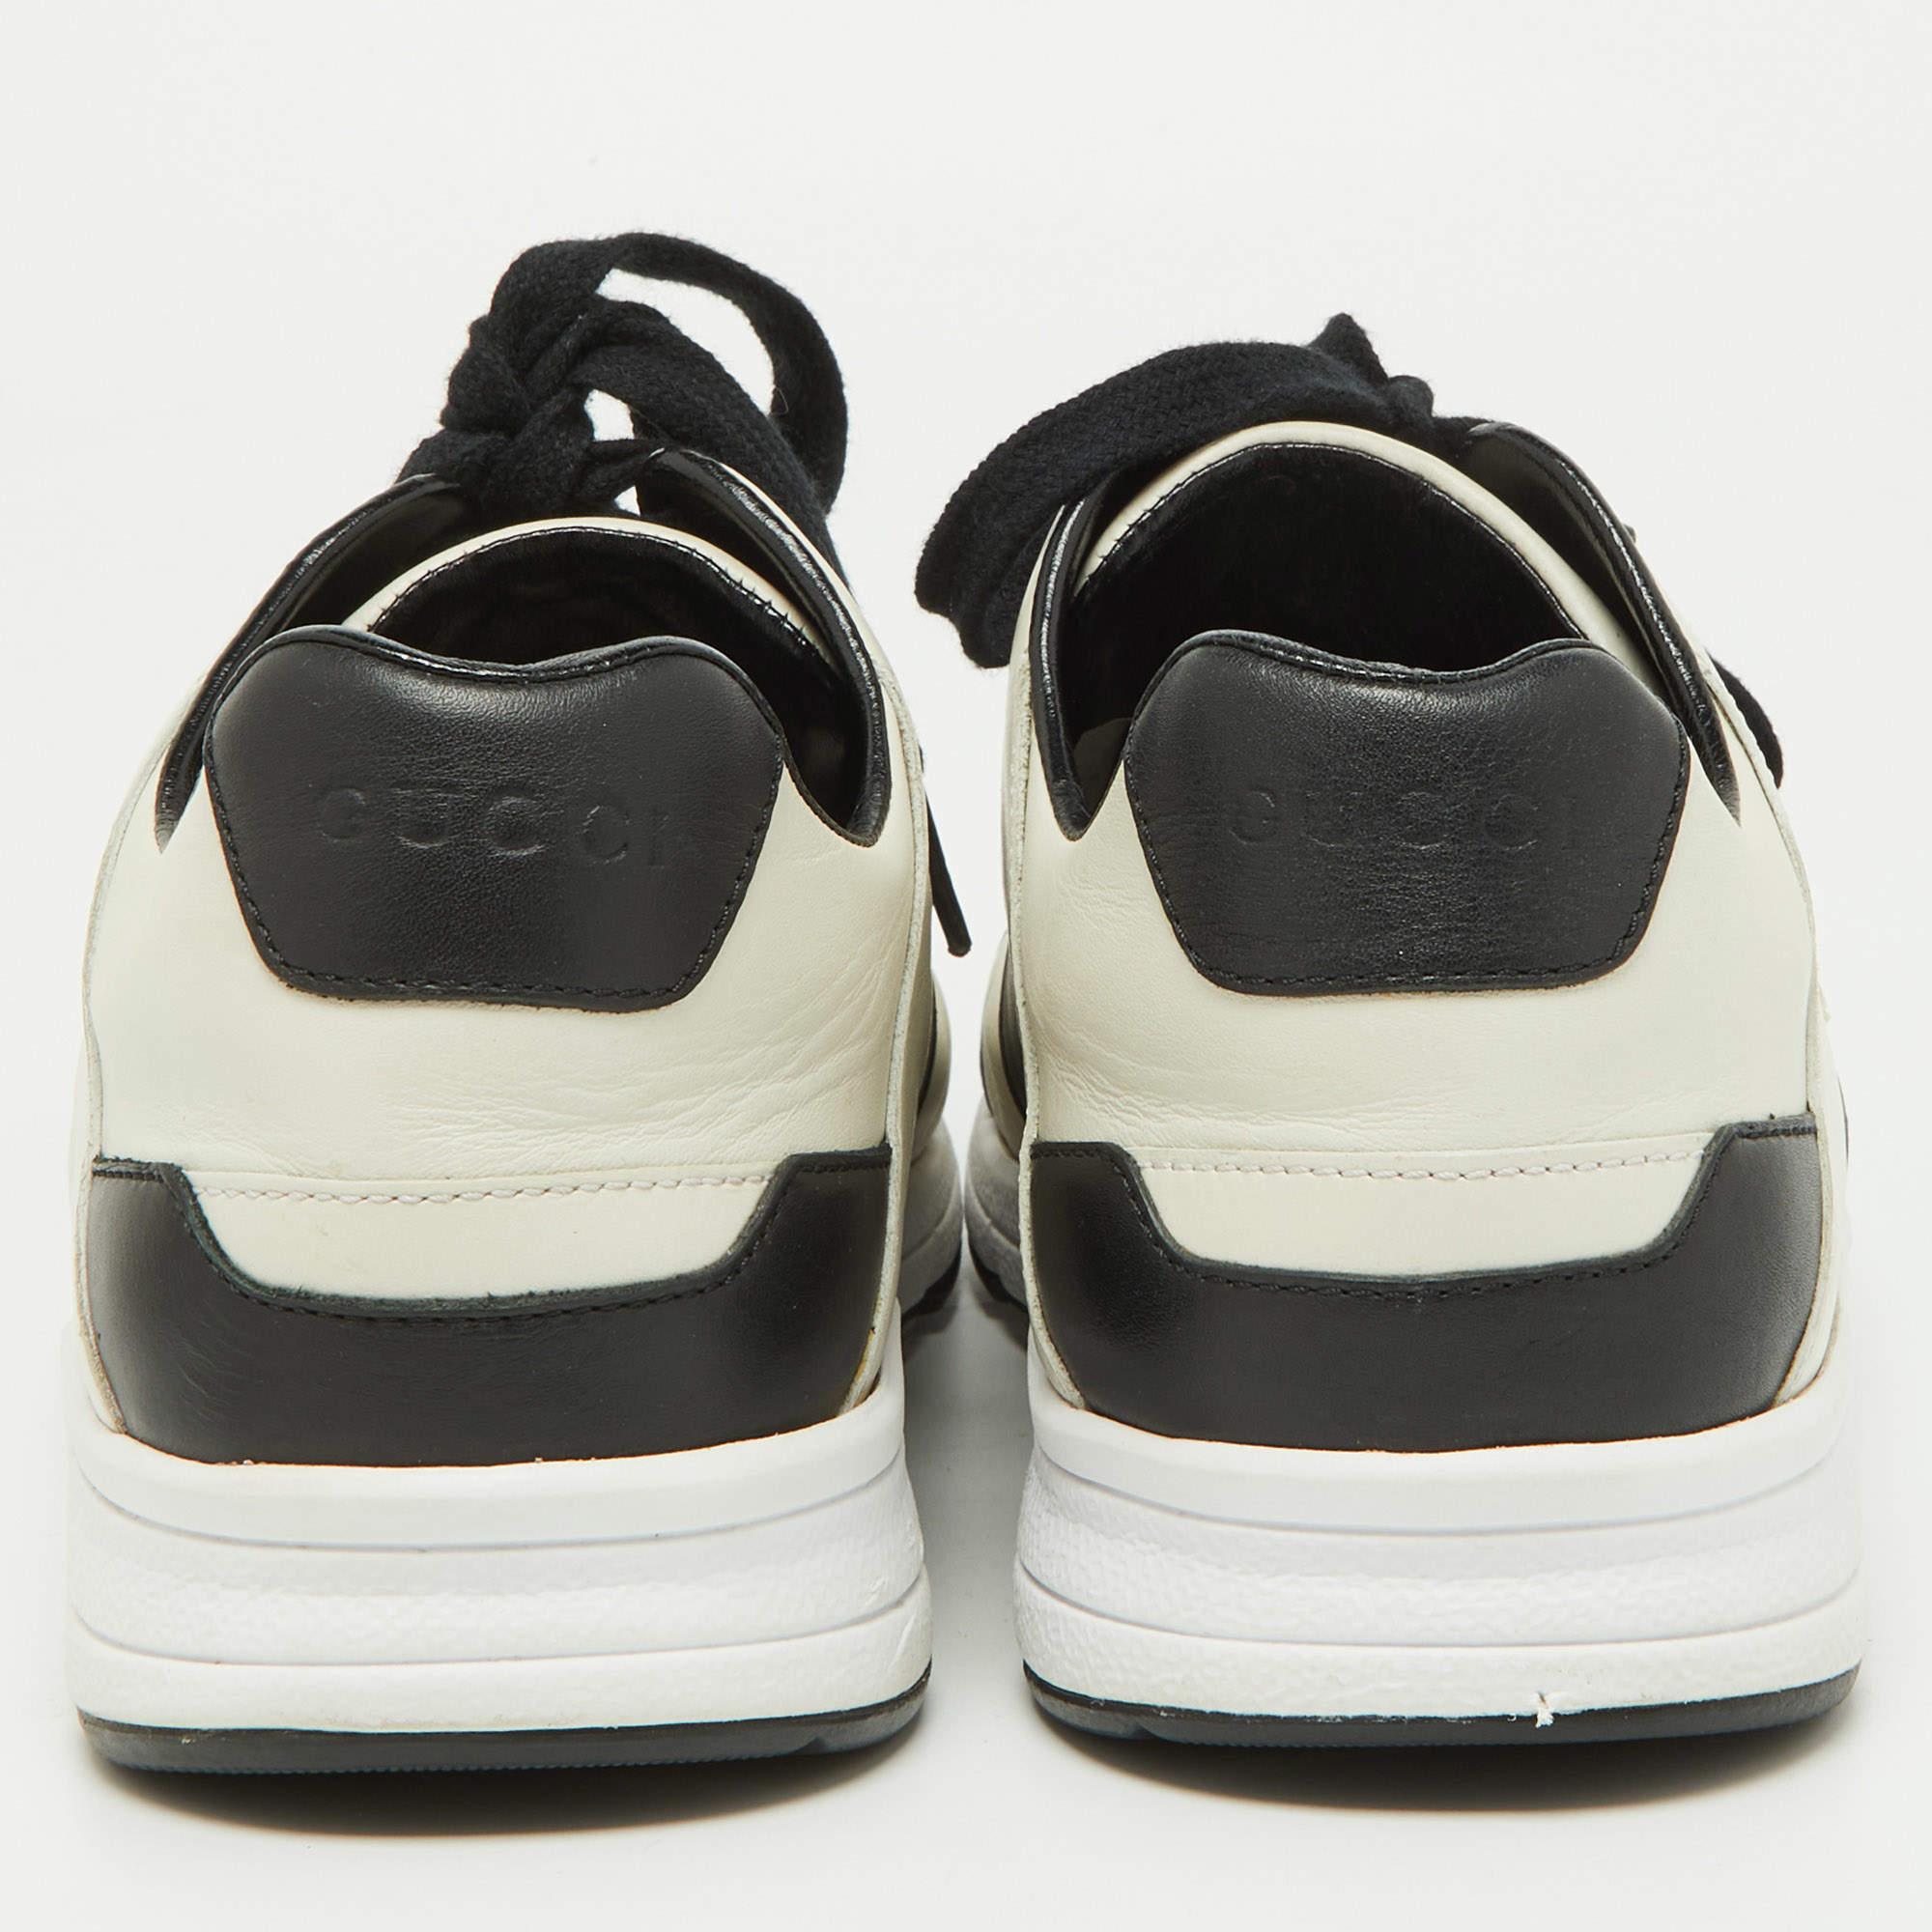 Gucci Black/White Leather Miro Sneakers Size 38.5 2